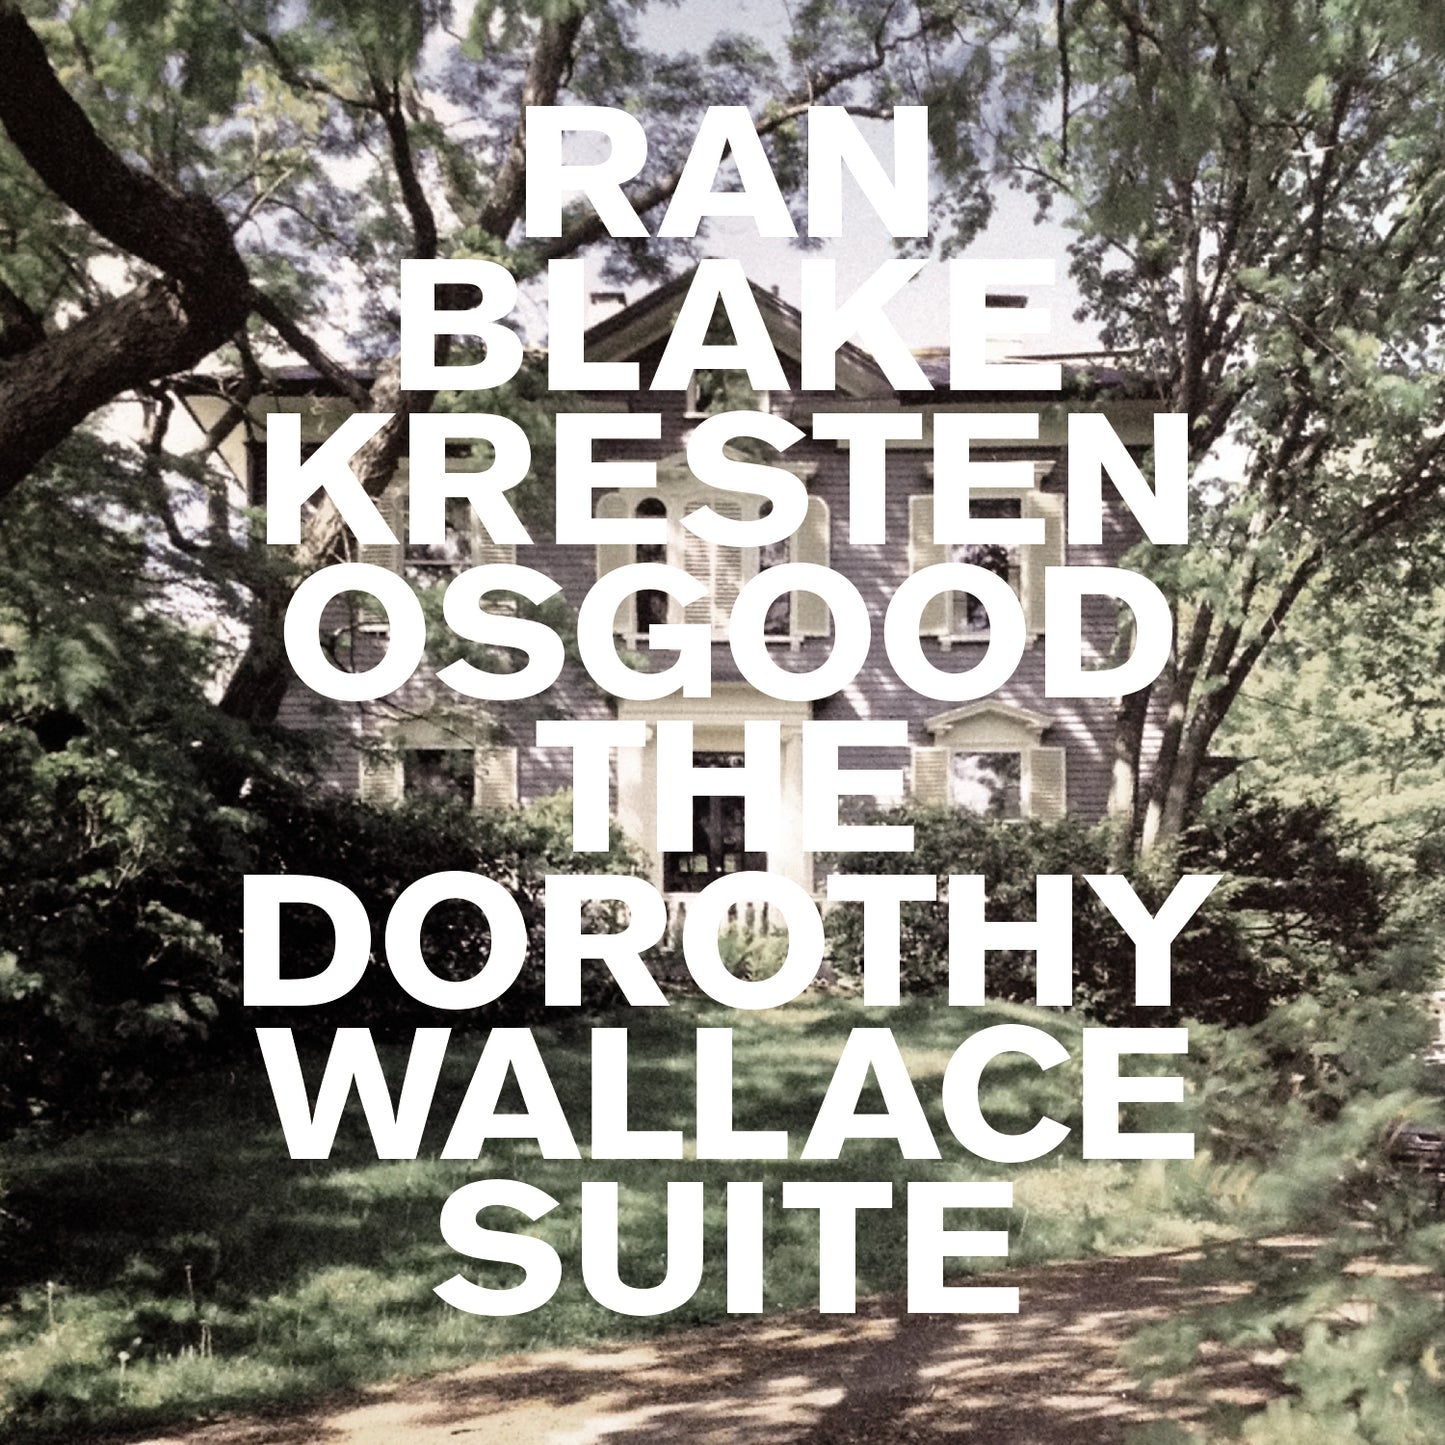 Ran Blake / Kresten Osgood: The Dorothy Wallace Suite